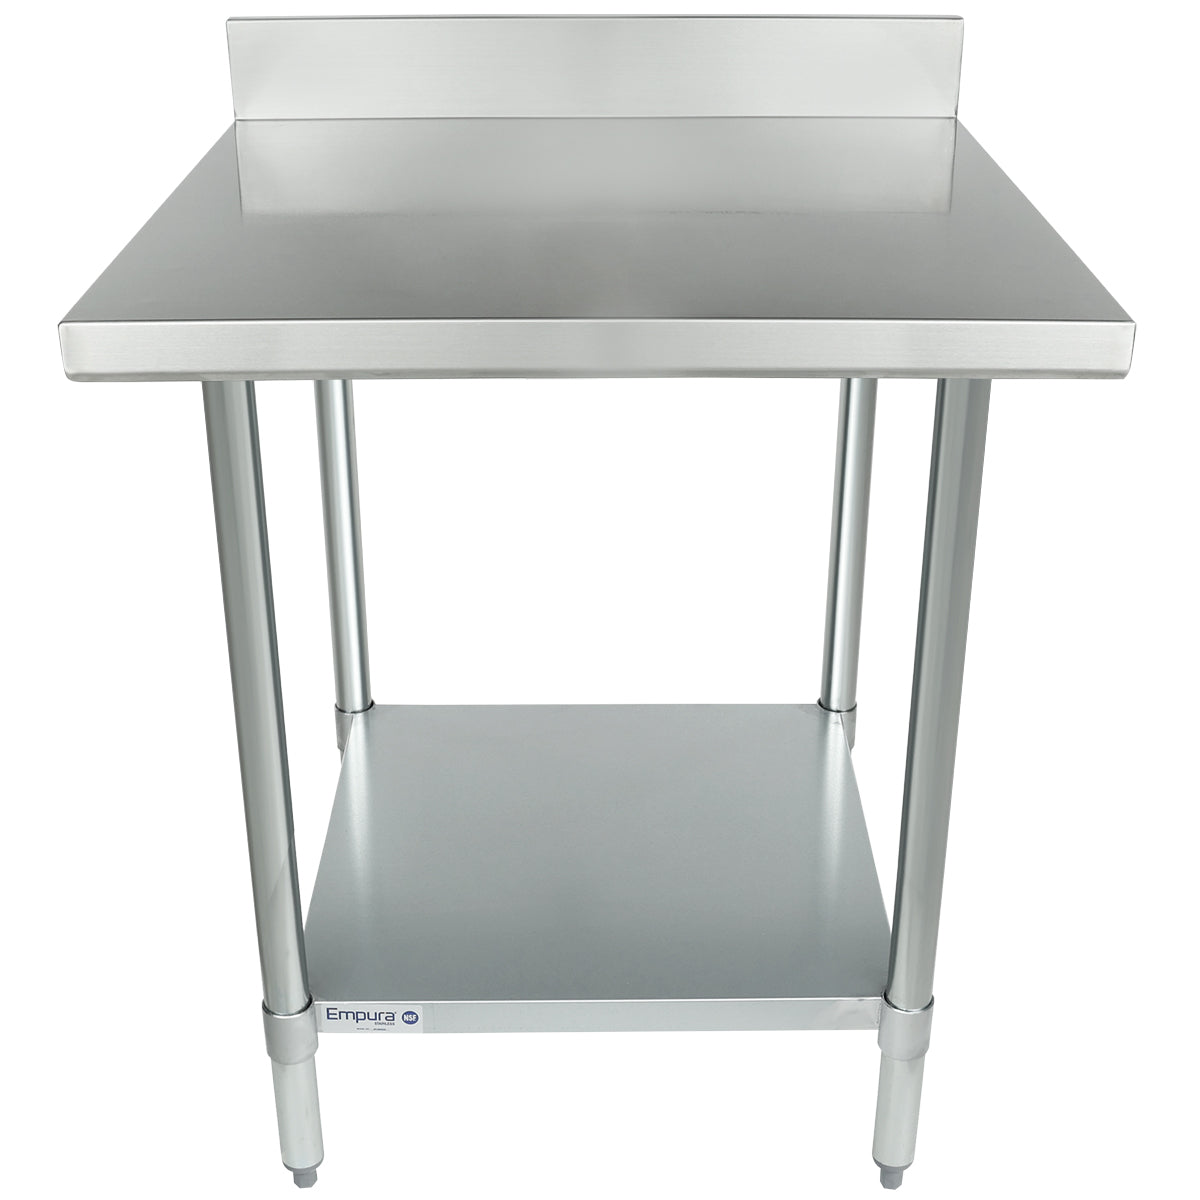 Empura 30" x 30" 18-Gauge 304 Stainless Steel Commercial Work Table with 4" Backsplash Galvanized Legs and Undershelf